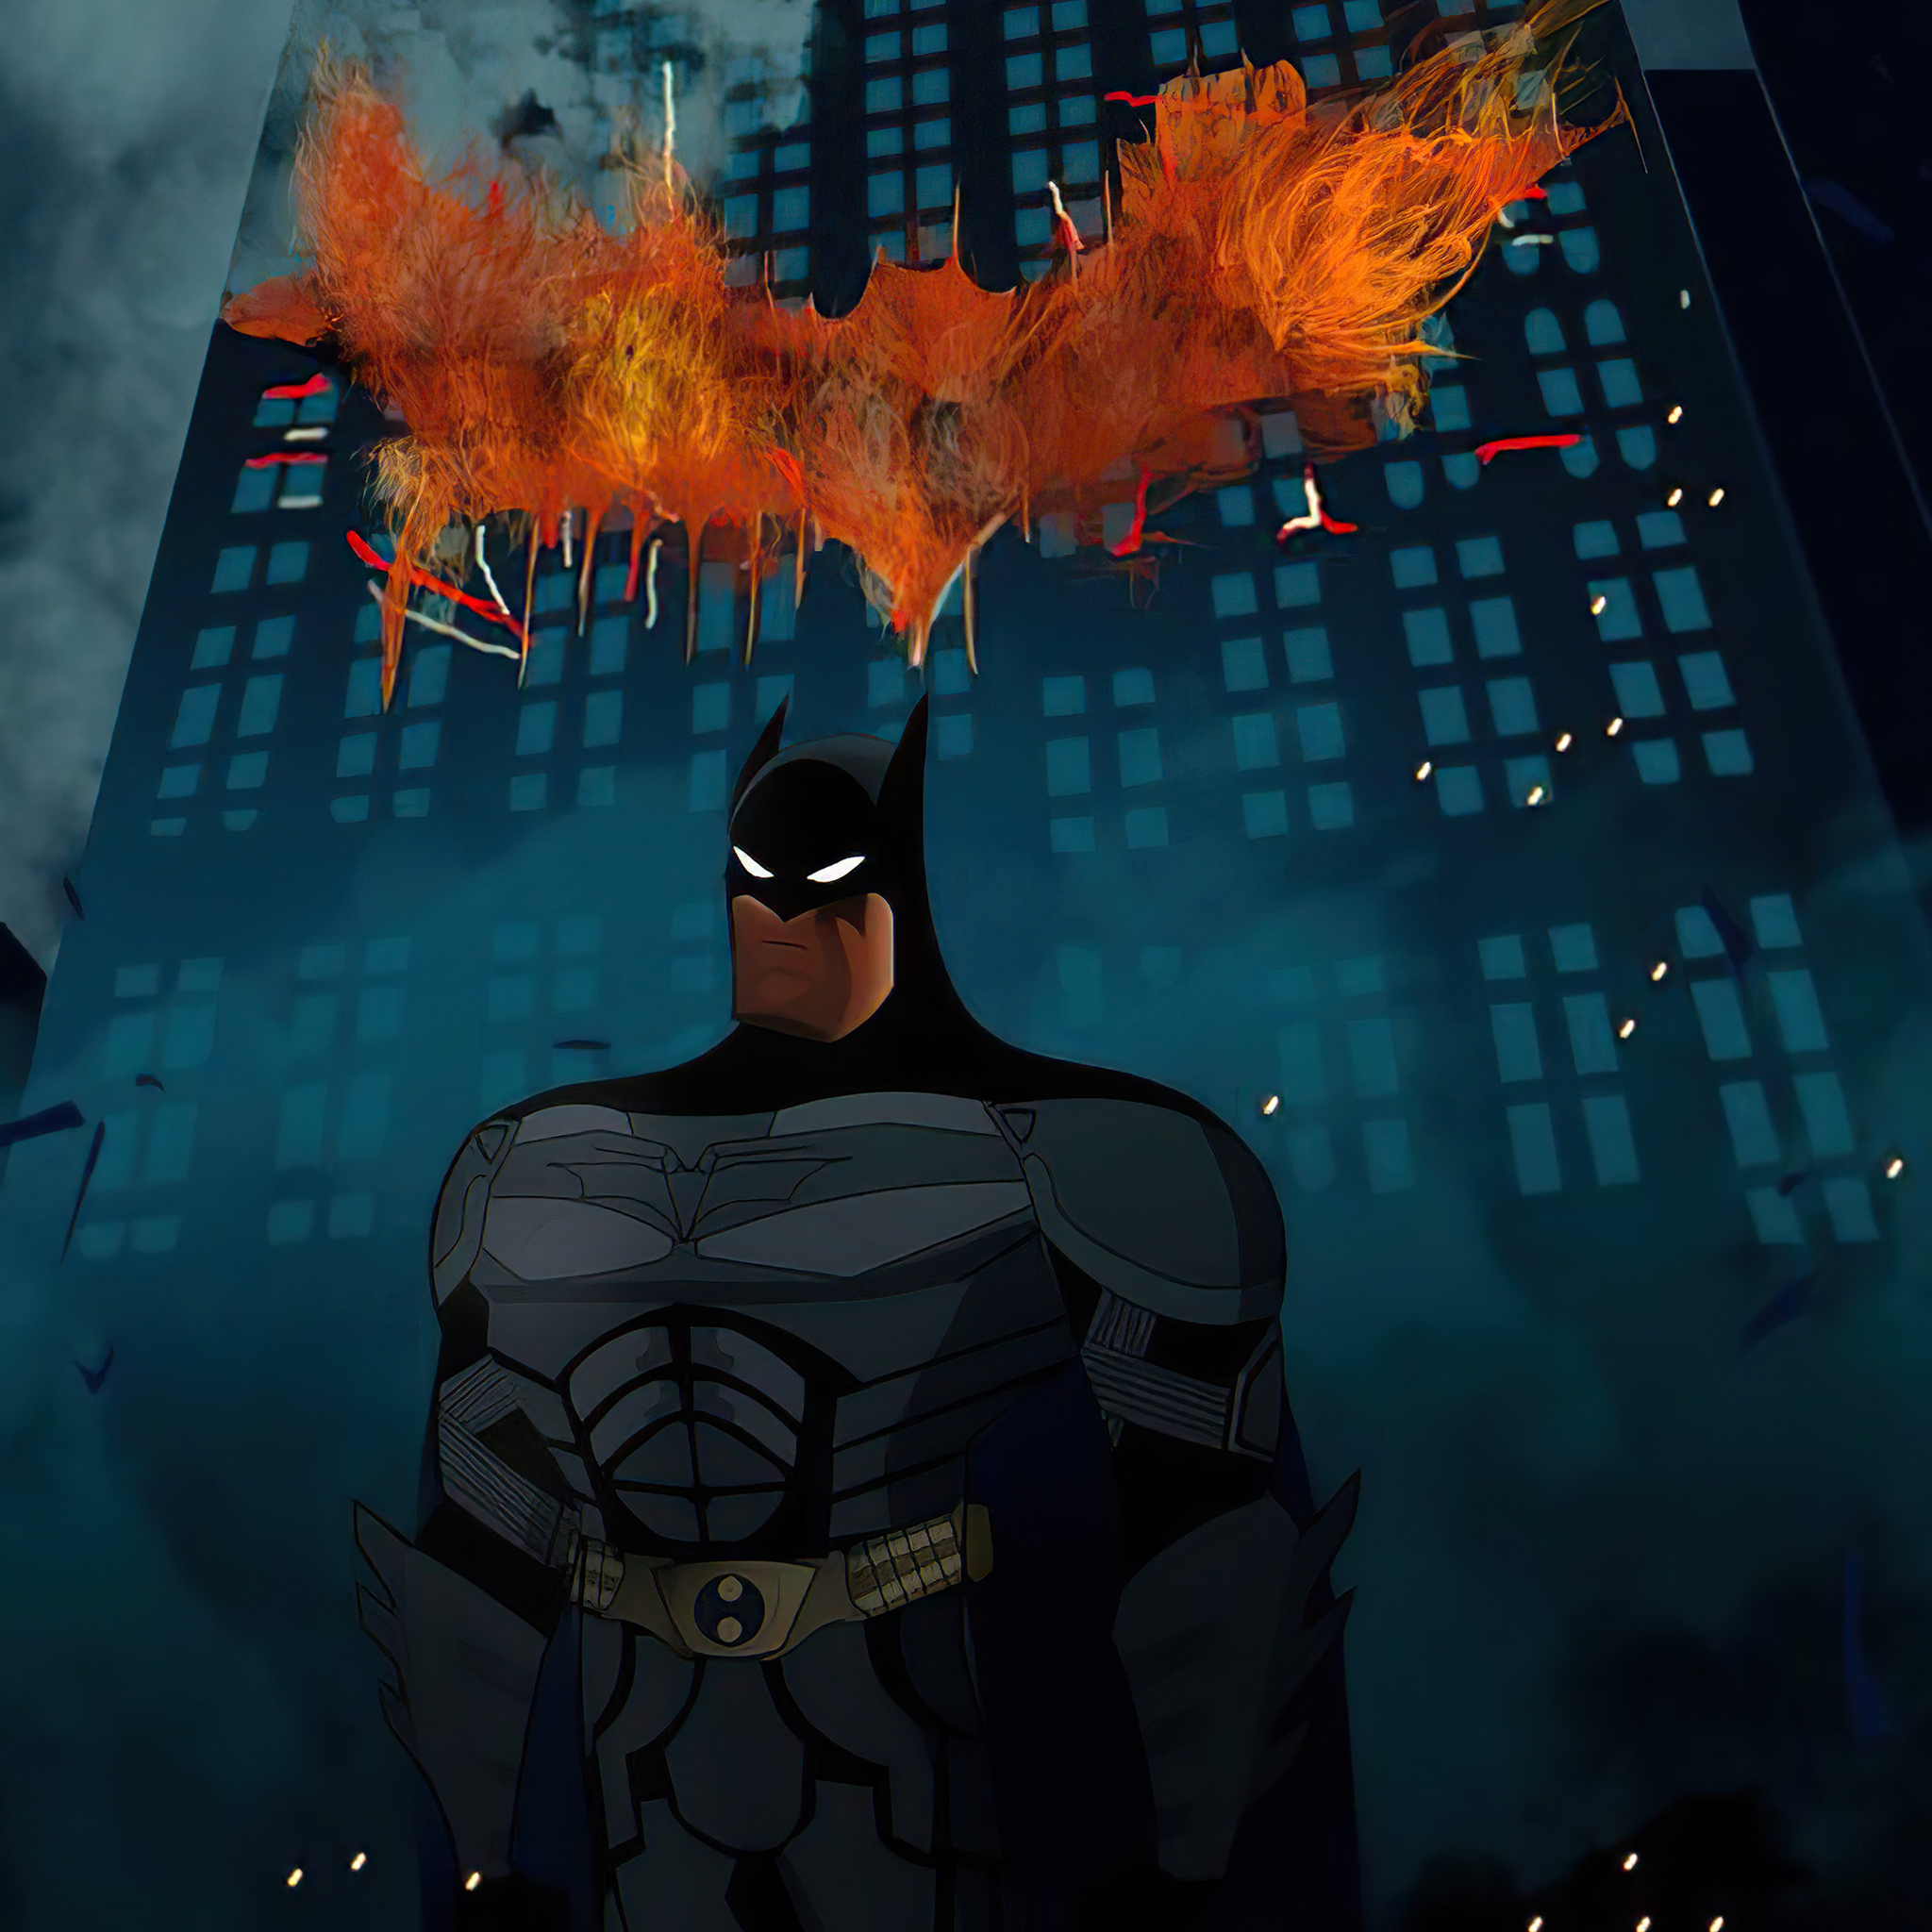 Batman The Dark Knight Minimal 4k iPad Air HD 4k Wallpaper, Image, Background, Photo and Picture